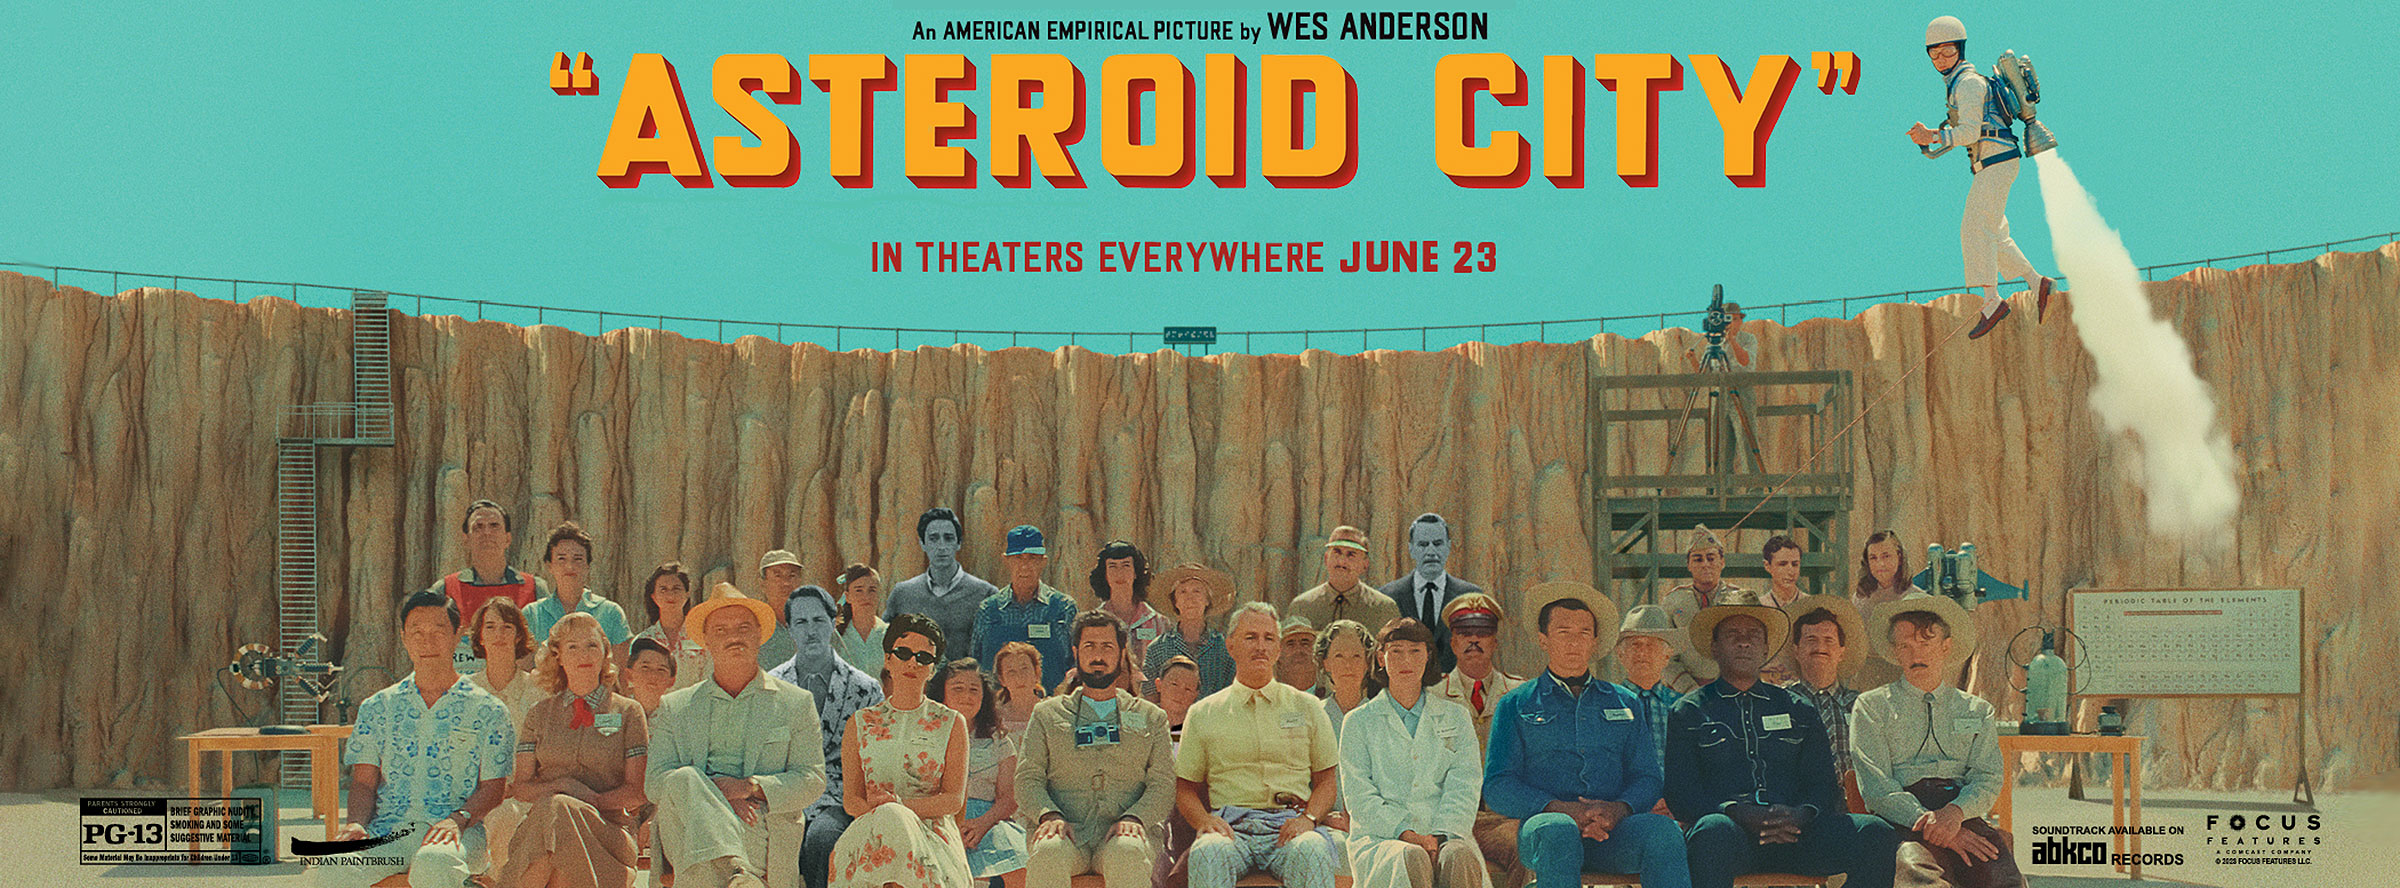 Slider Image for Asteroid City